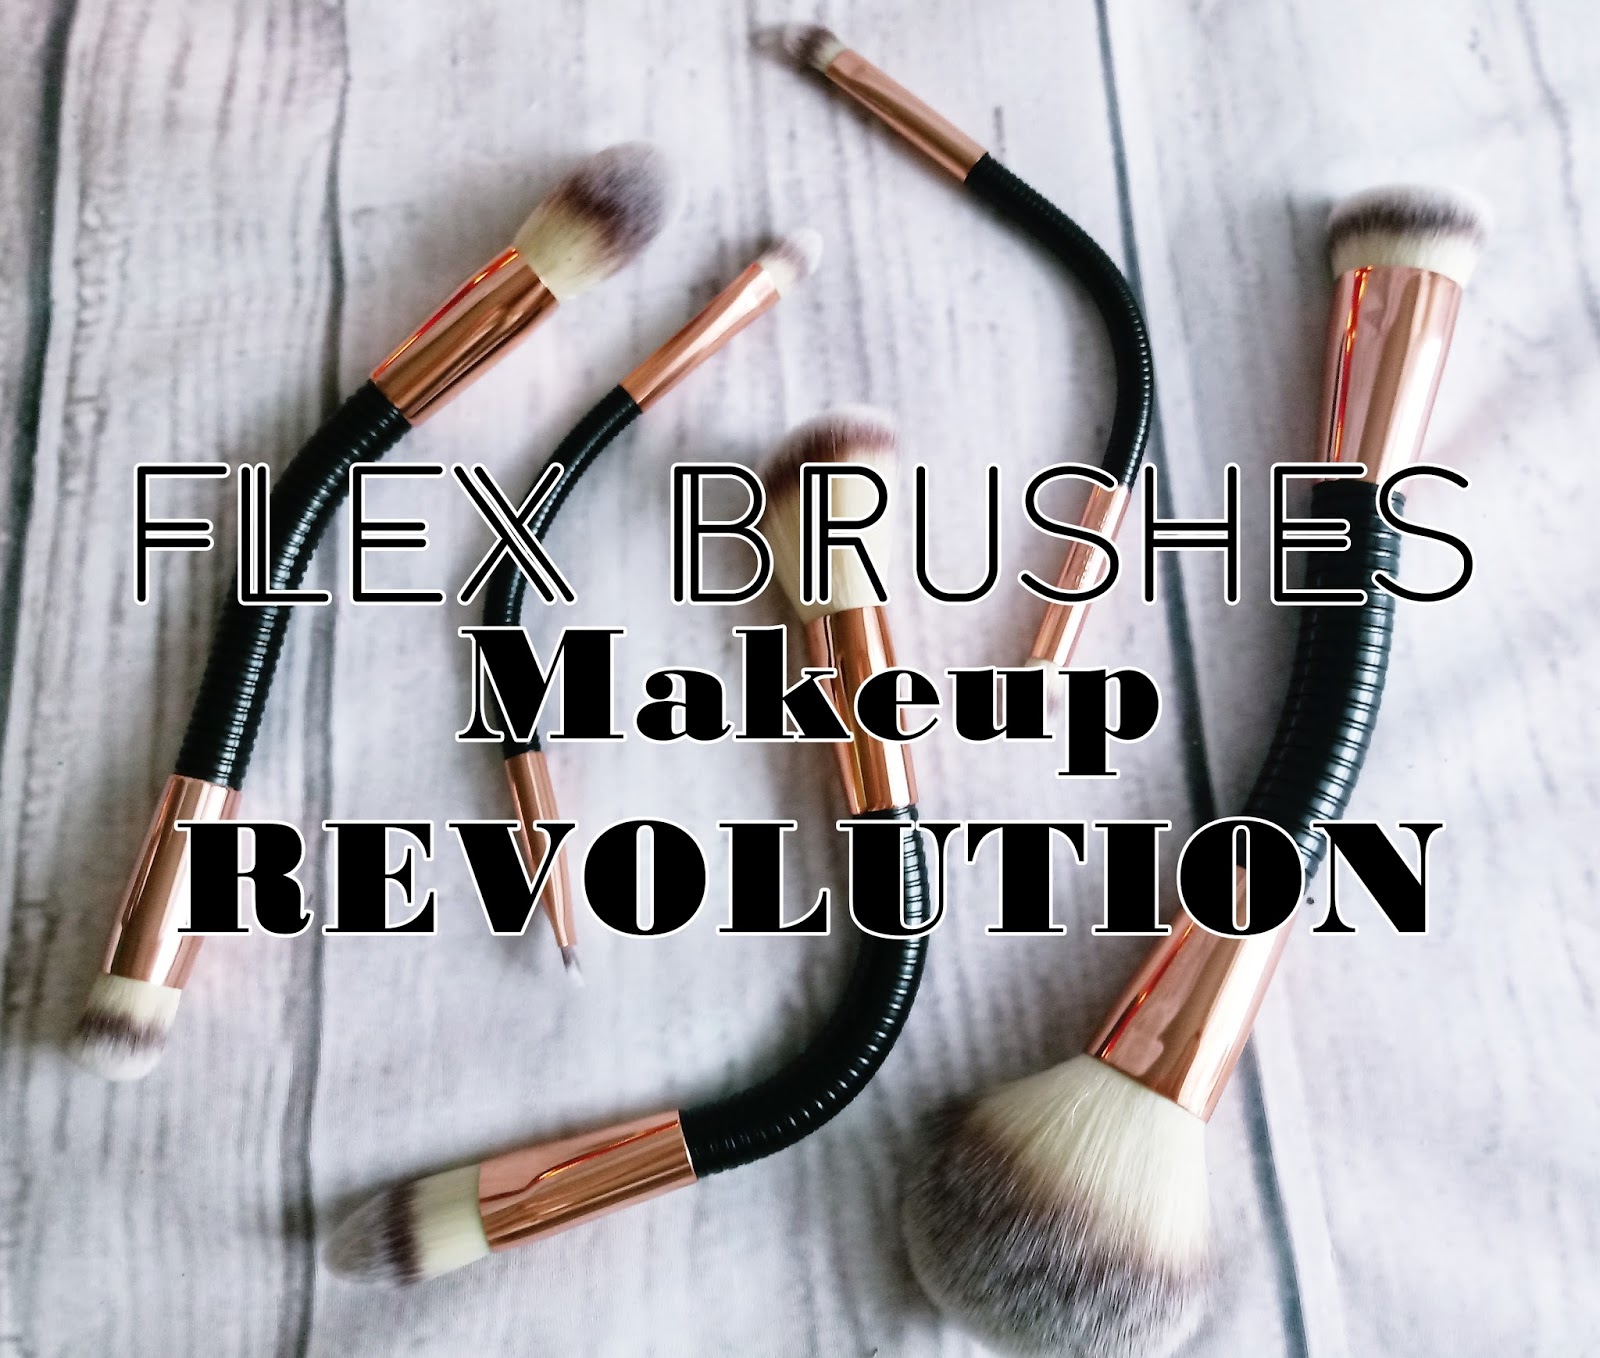 Makeup Revolution #FLEX BRUSHES